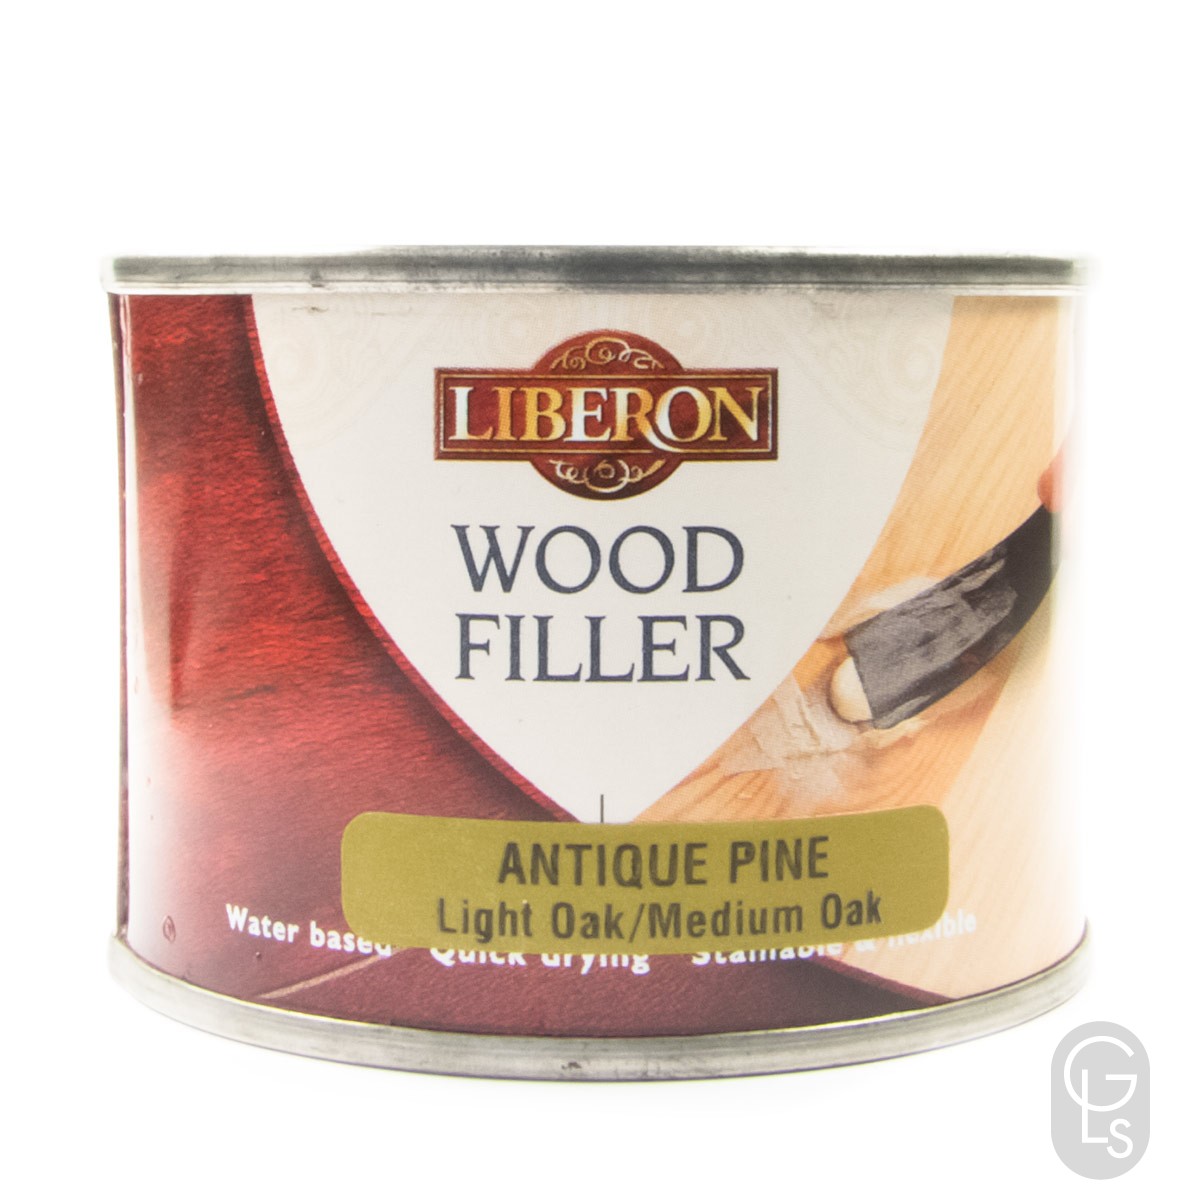 Liberon Wood Filler - Antique Pine